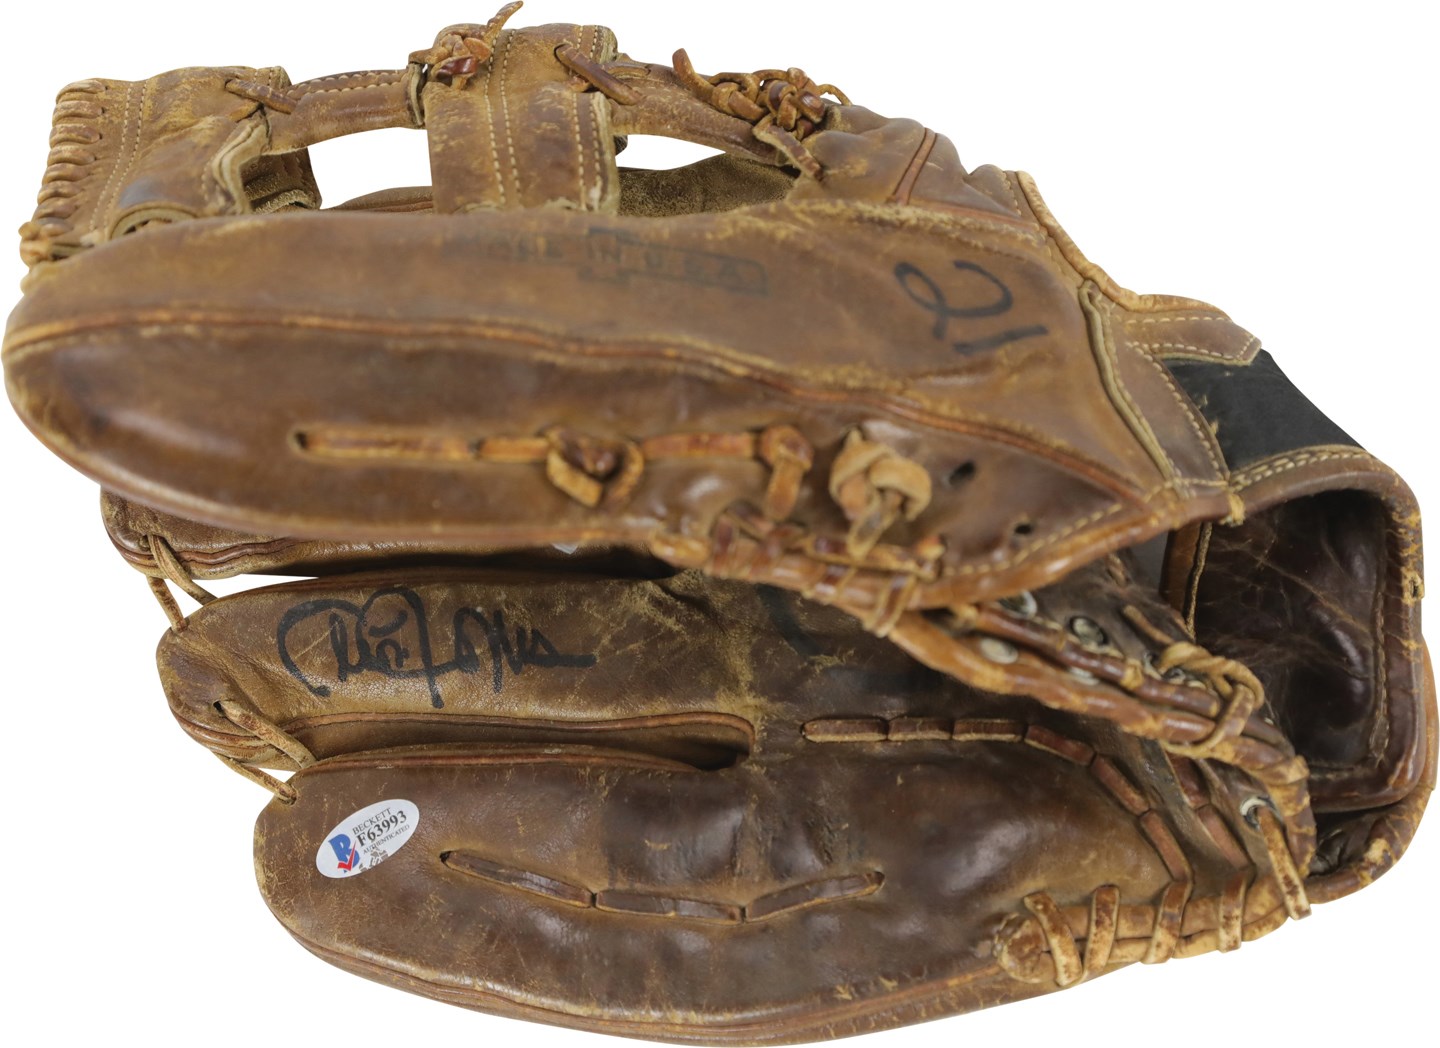 Baseball Equipment - 1967 Cleon Jones New York Mets Signed Game Used Glove (PSA)